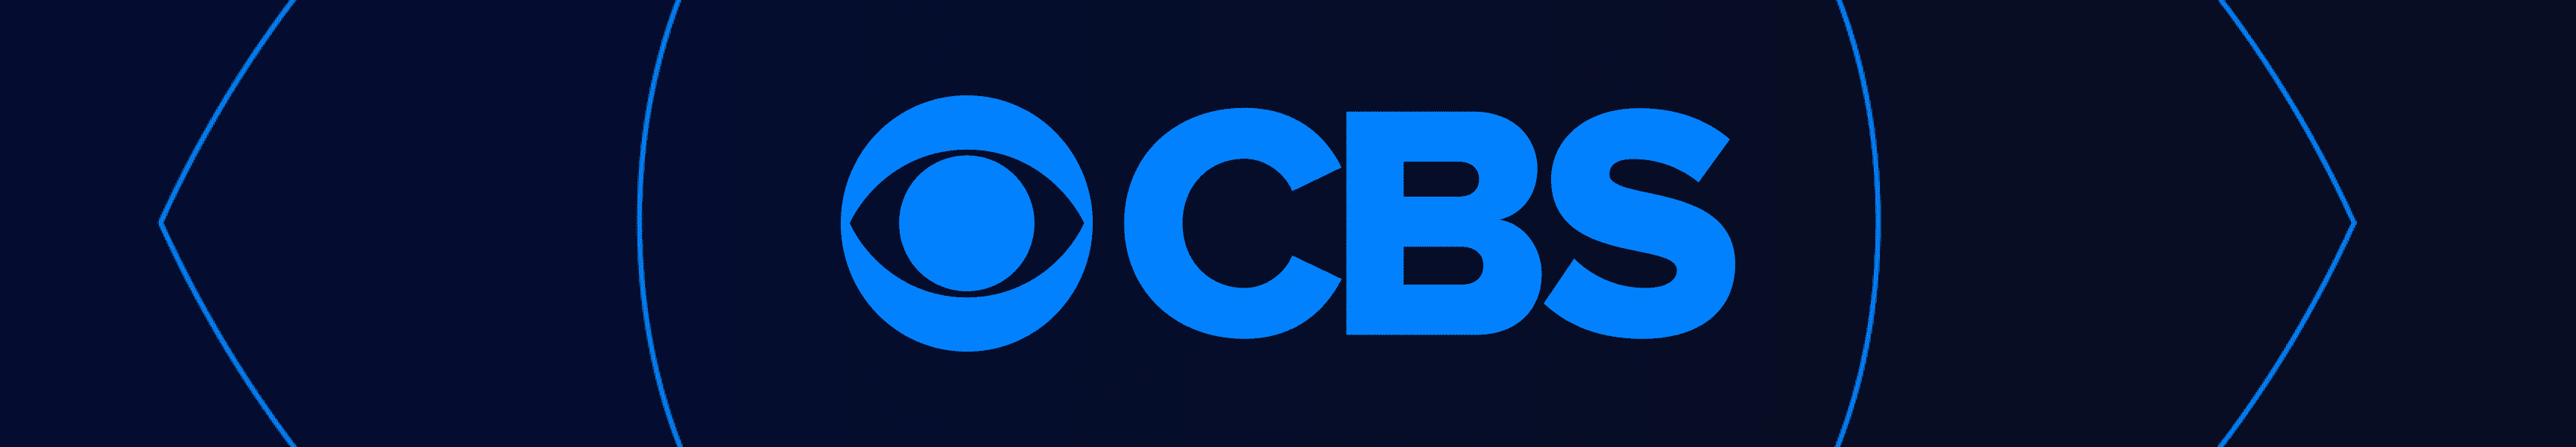 CBS Entertainment Robes